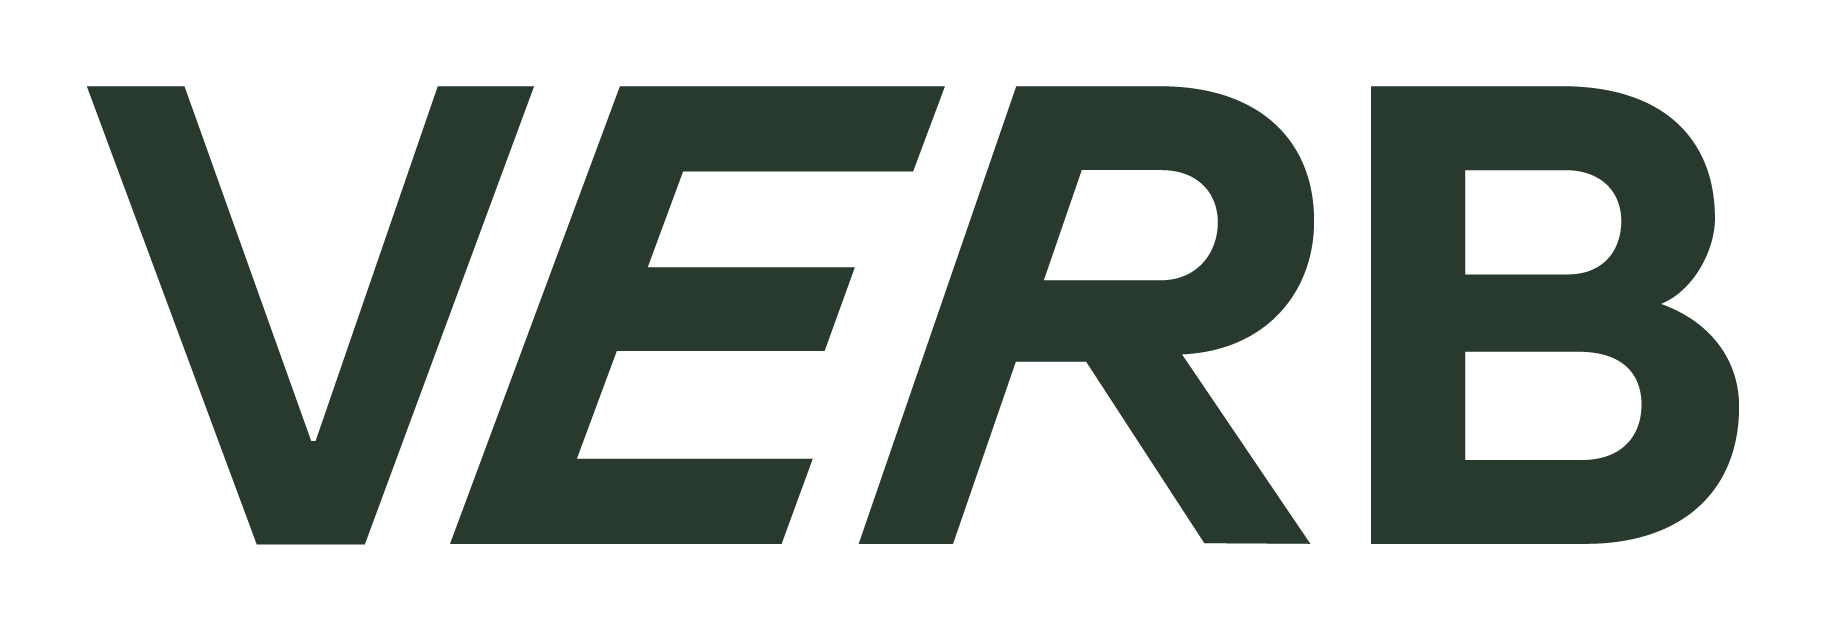 Verb_Logo_Green__1_.png